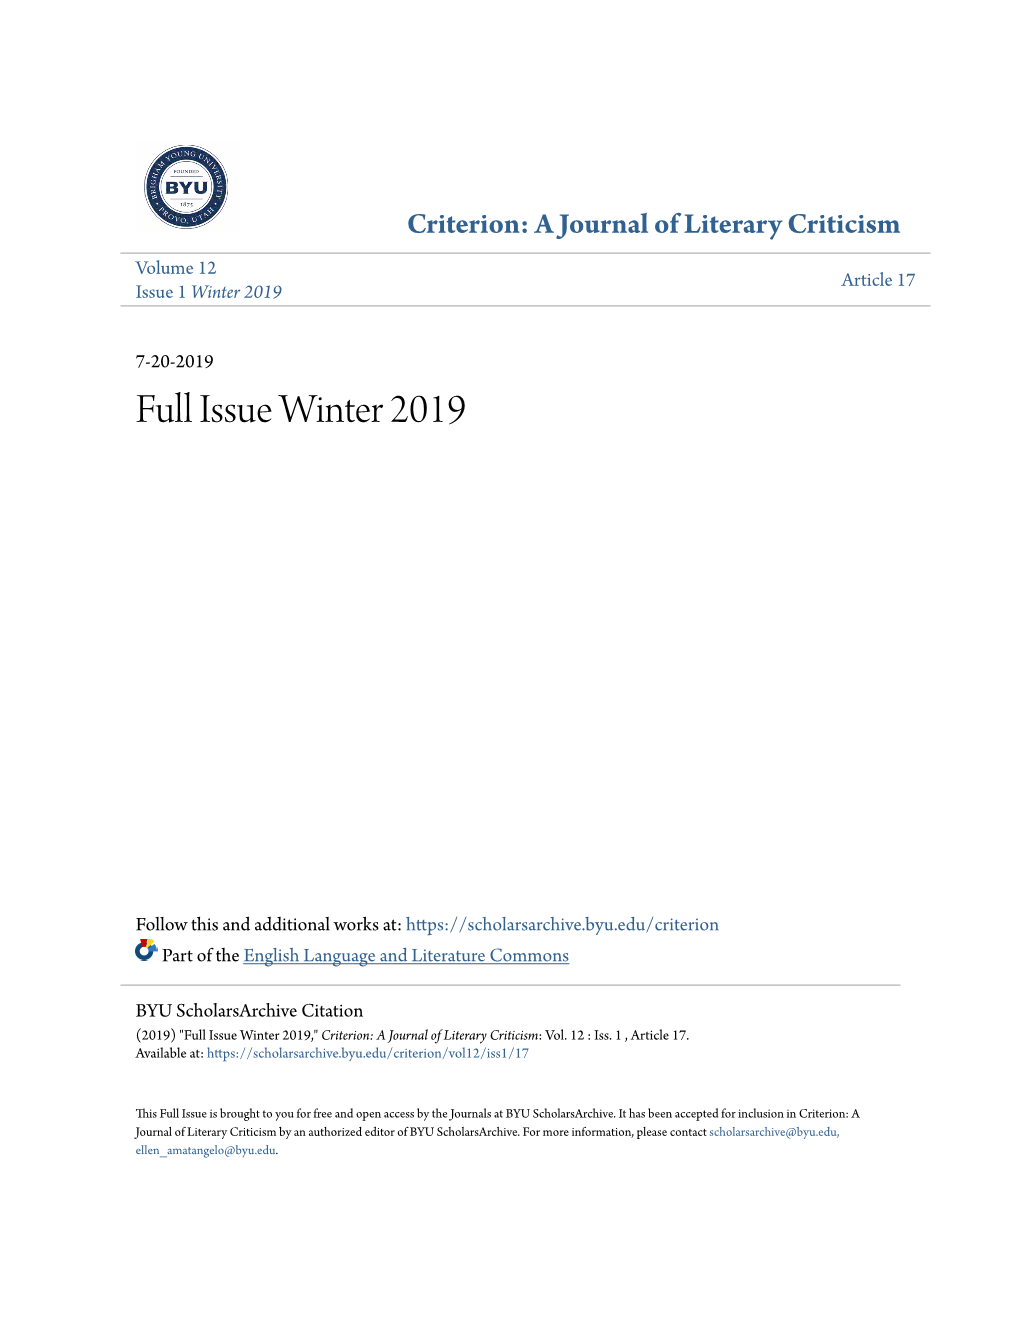 Full Issue Winter 2019